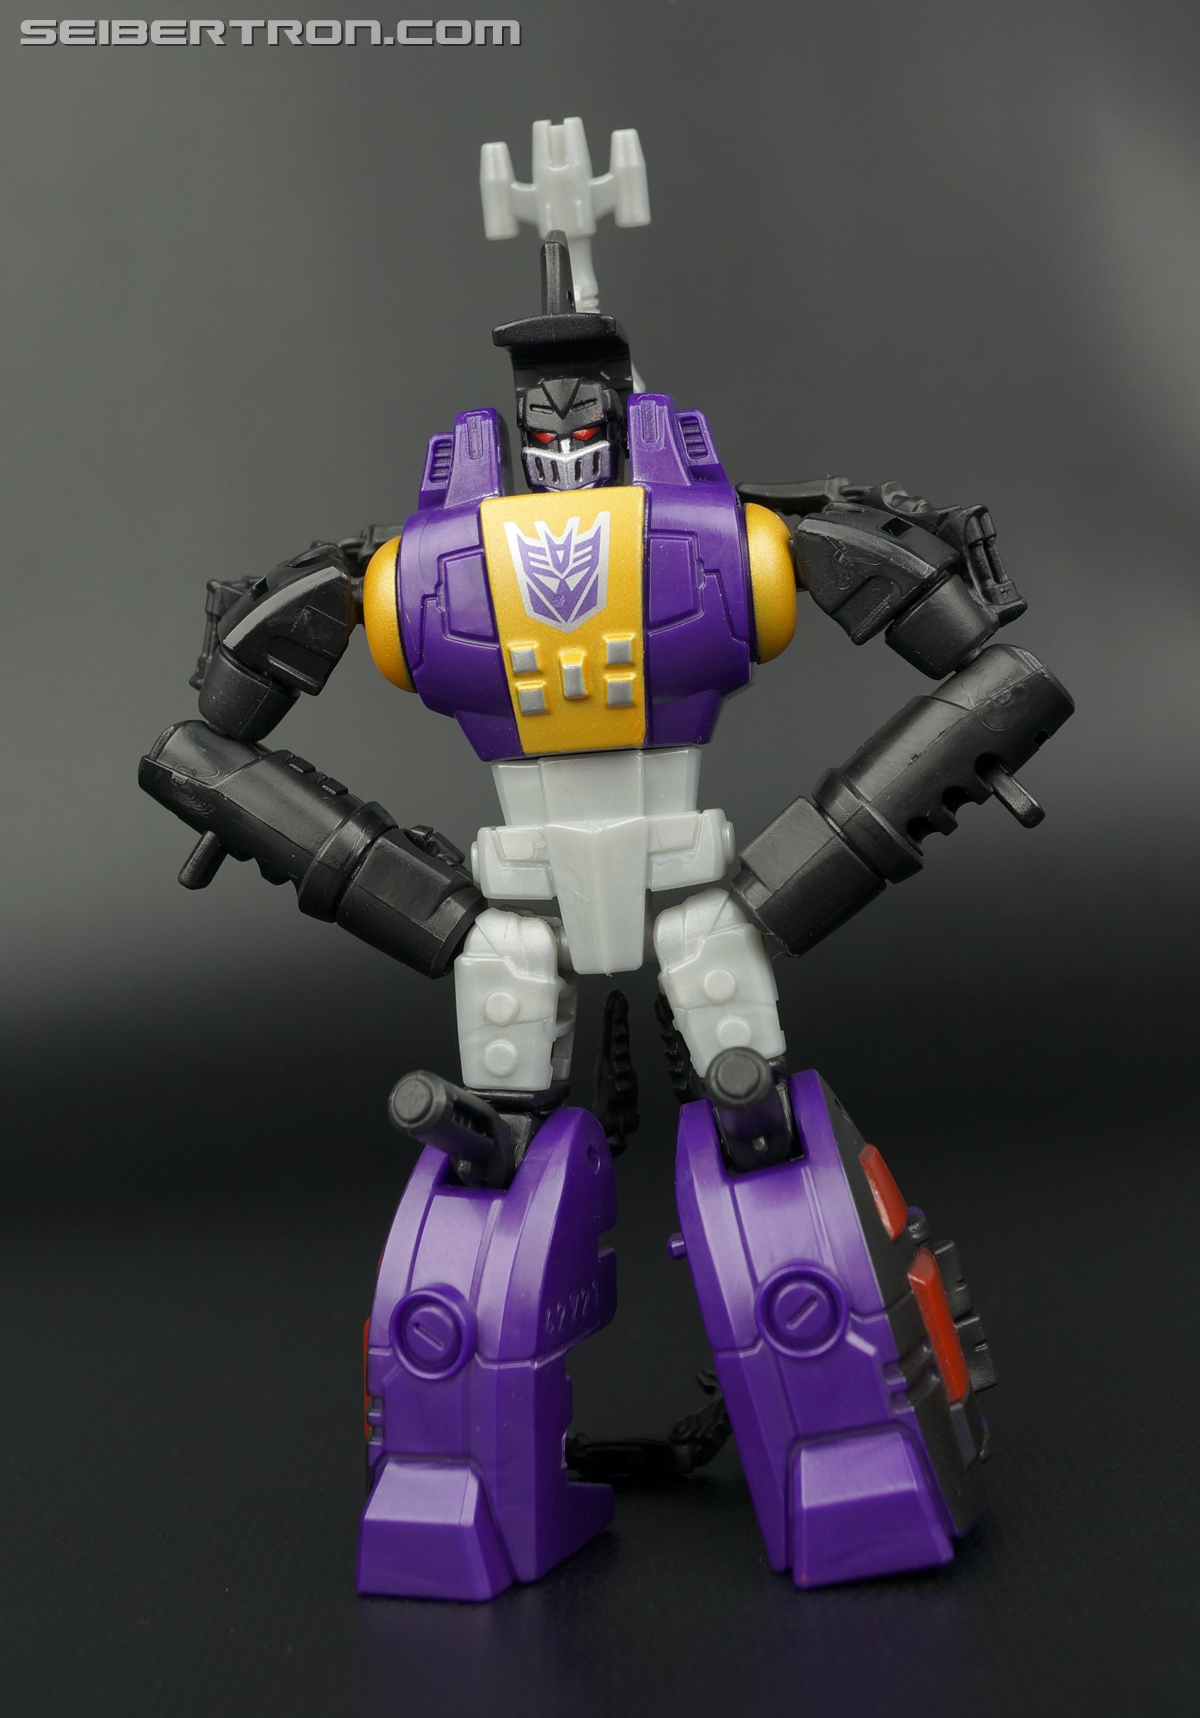 Transformers Generations Combiner Wars Legends Class Bombshell Action Figure Toy 